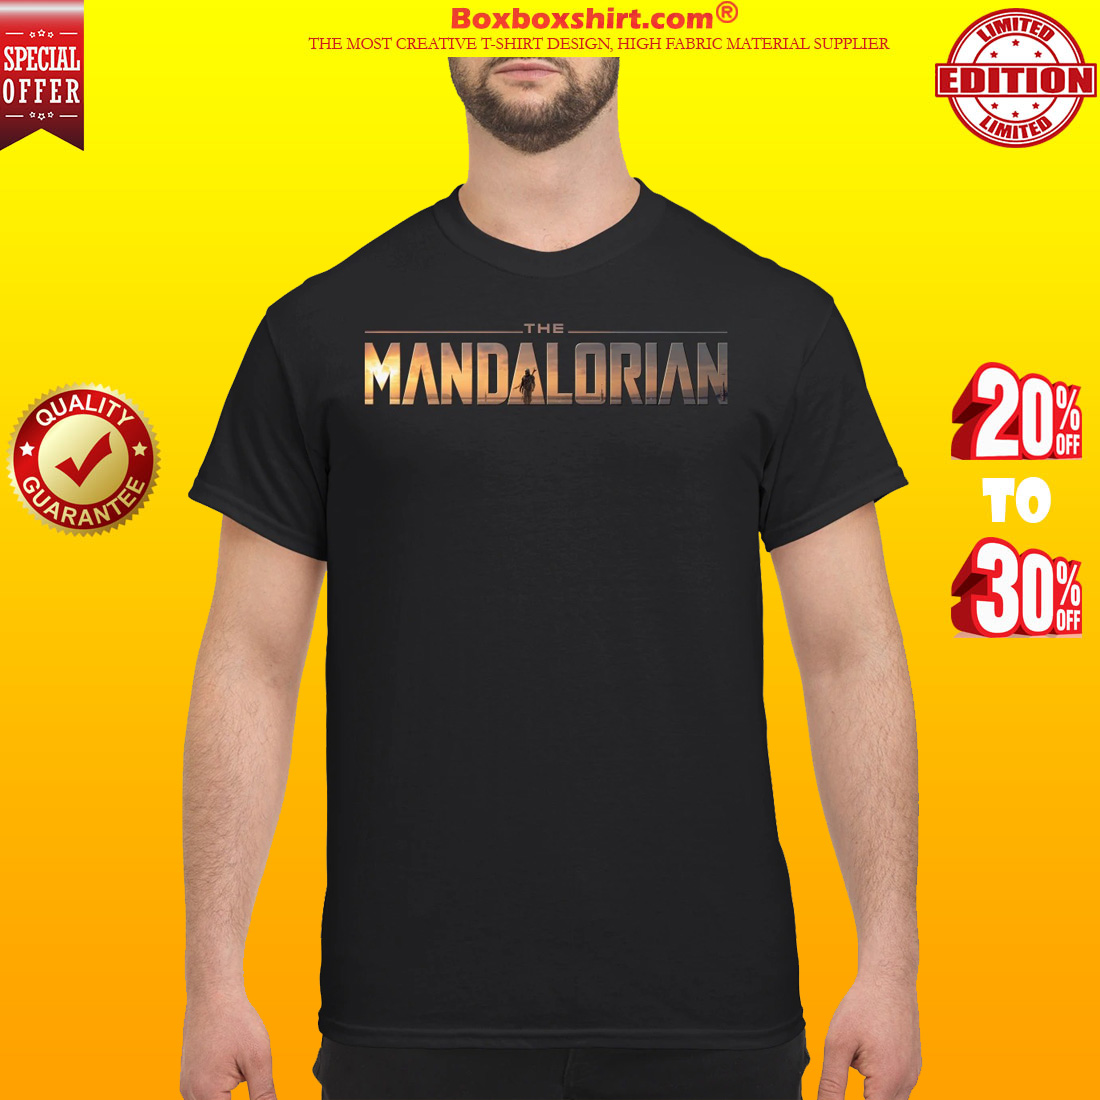 The mandalorian star wars classic shirt